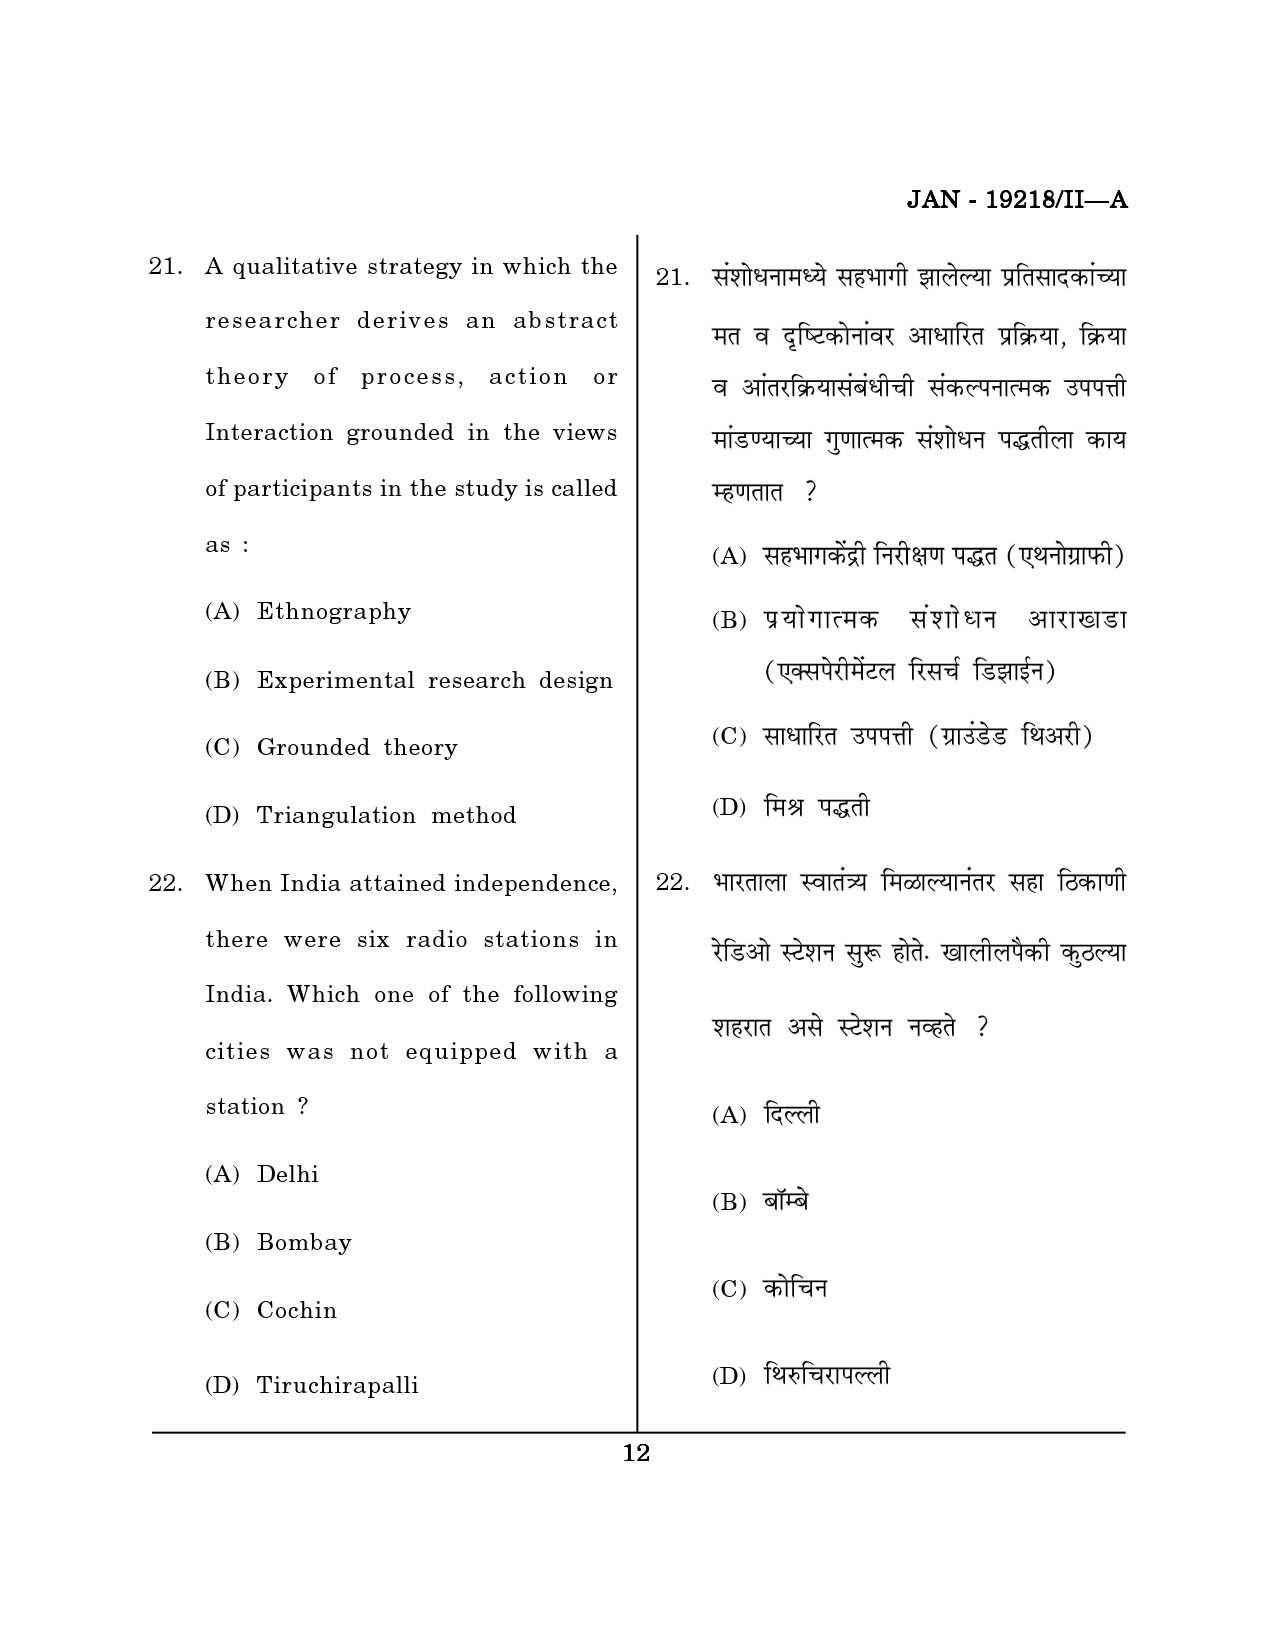 Maharashtra SET Journalism and Mass Communication Question Paper II January 2018 11